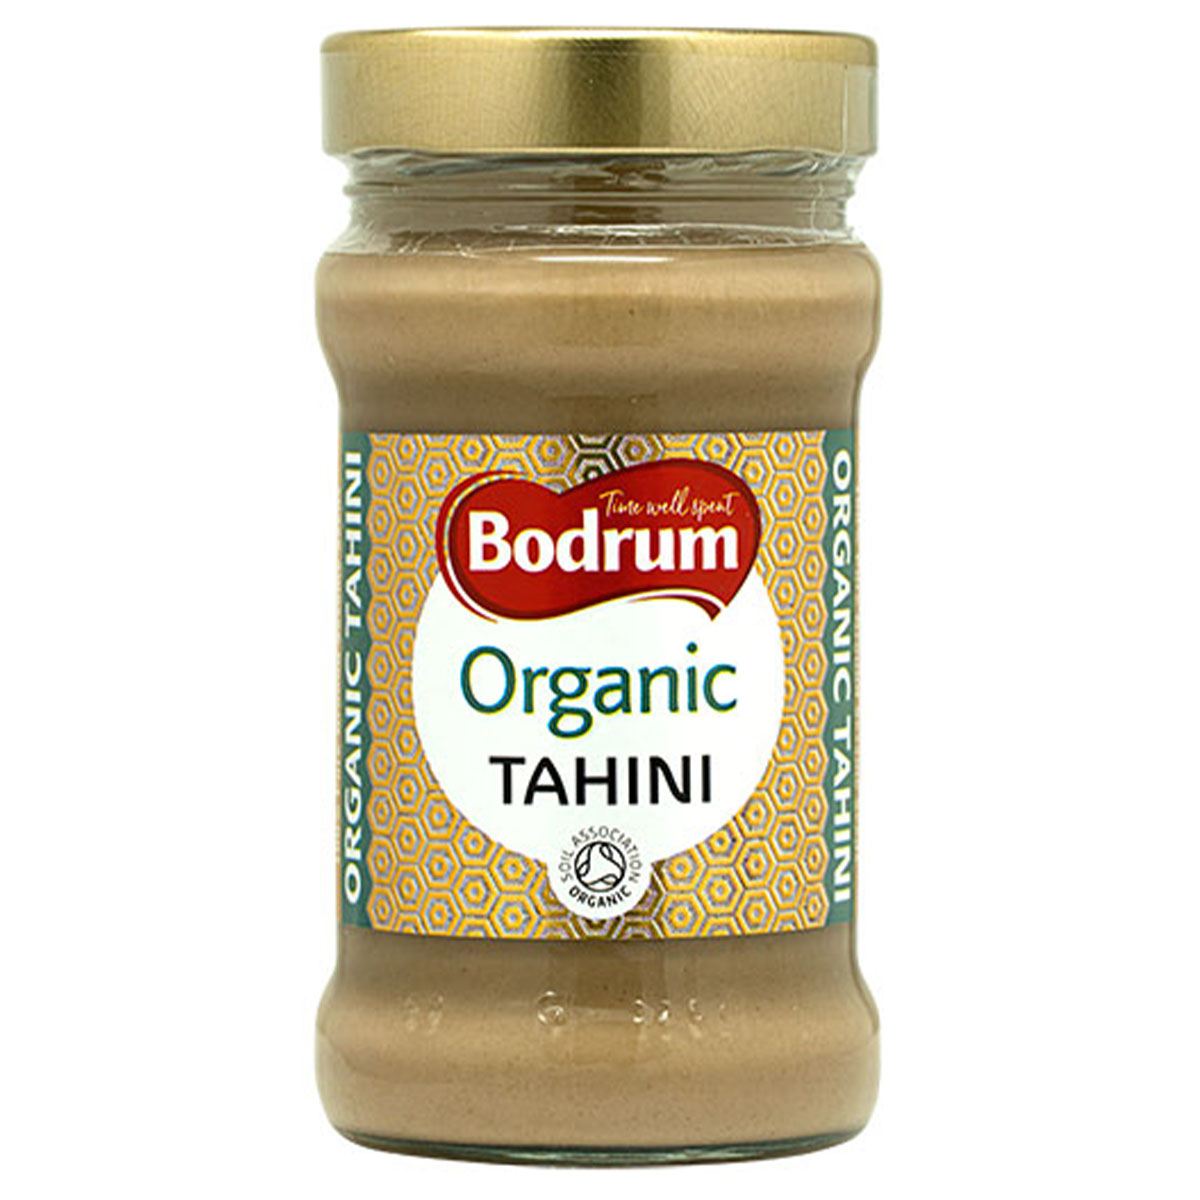 Bodrum - Organic Tahini - 300g - Continental Food Store